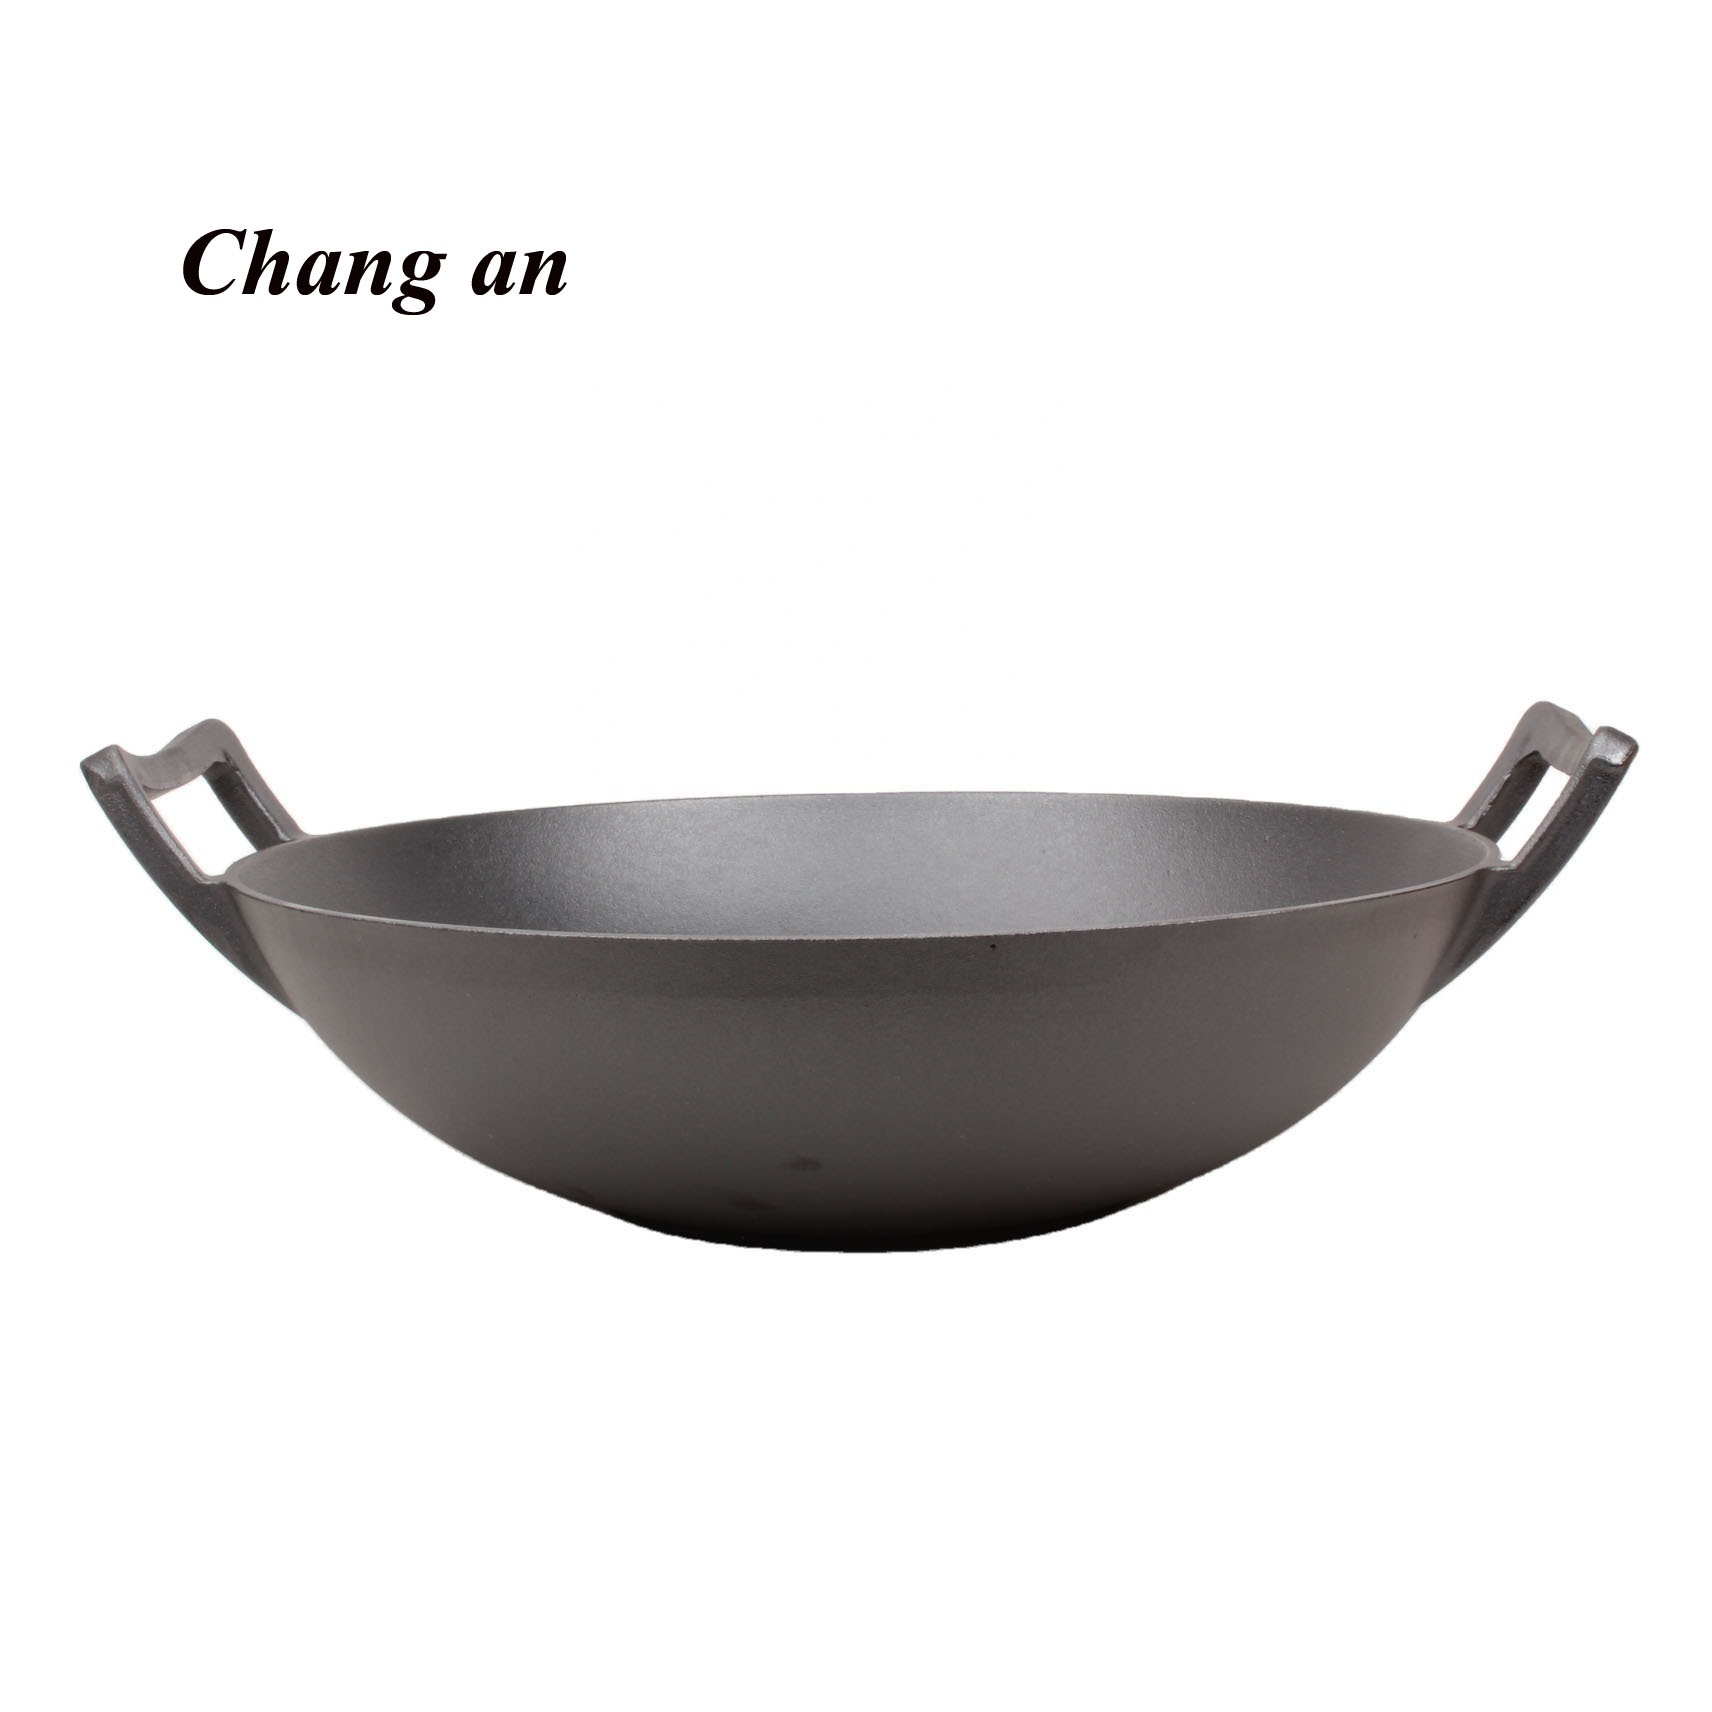 Pre-seasoned cast iron wok